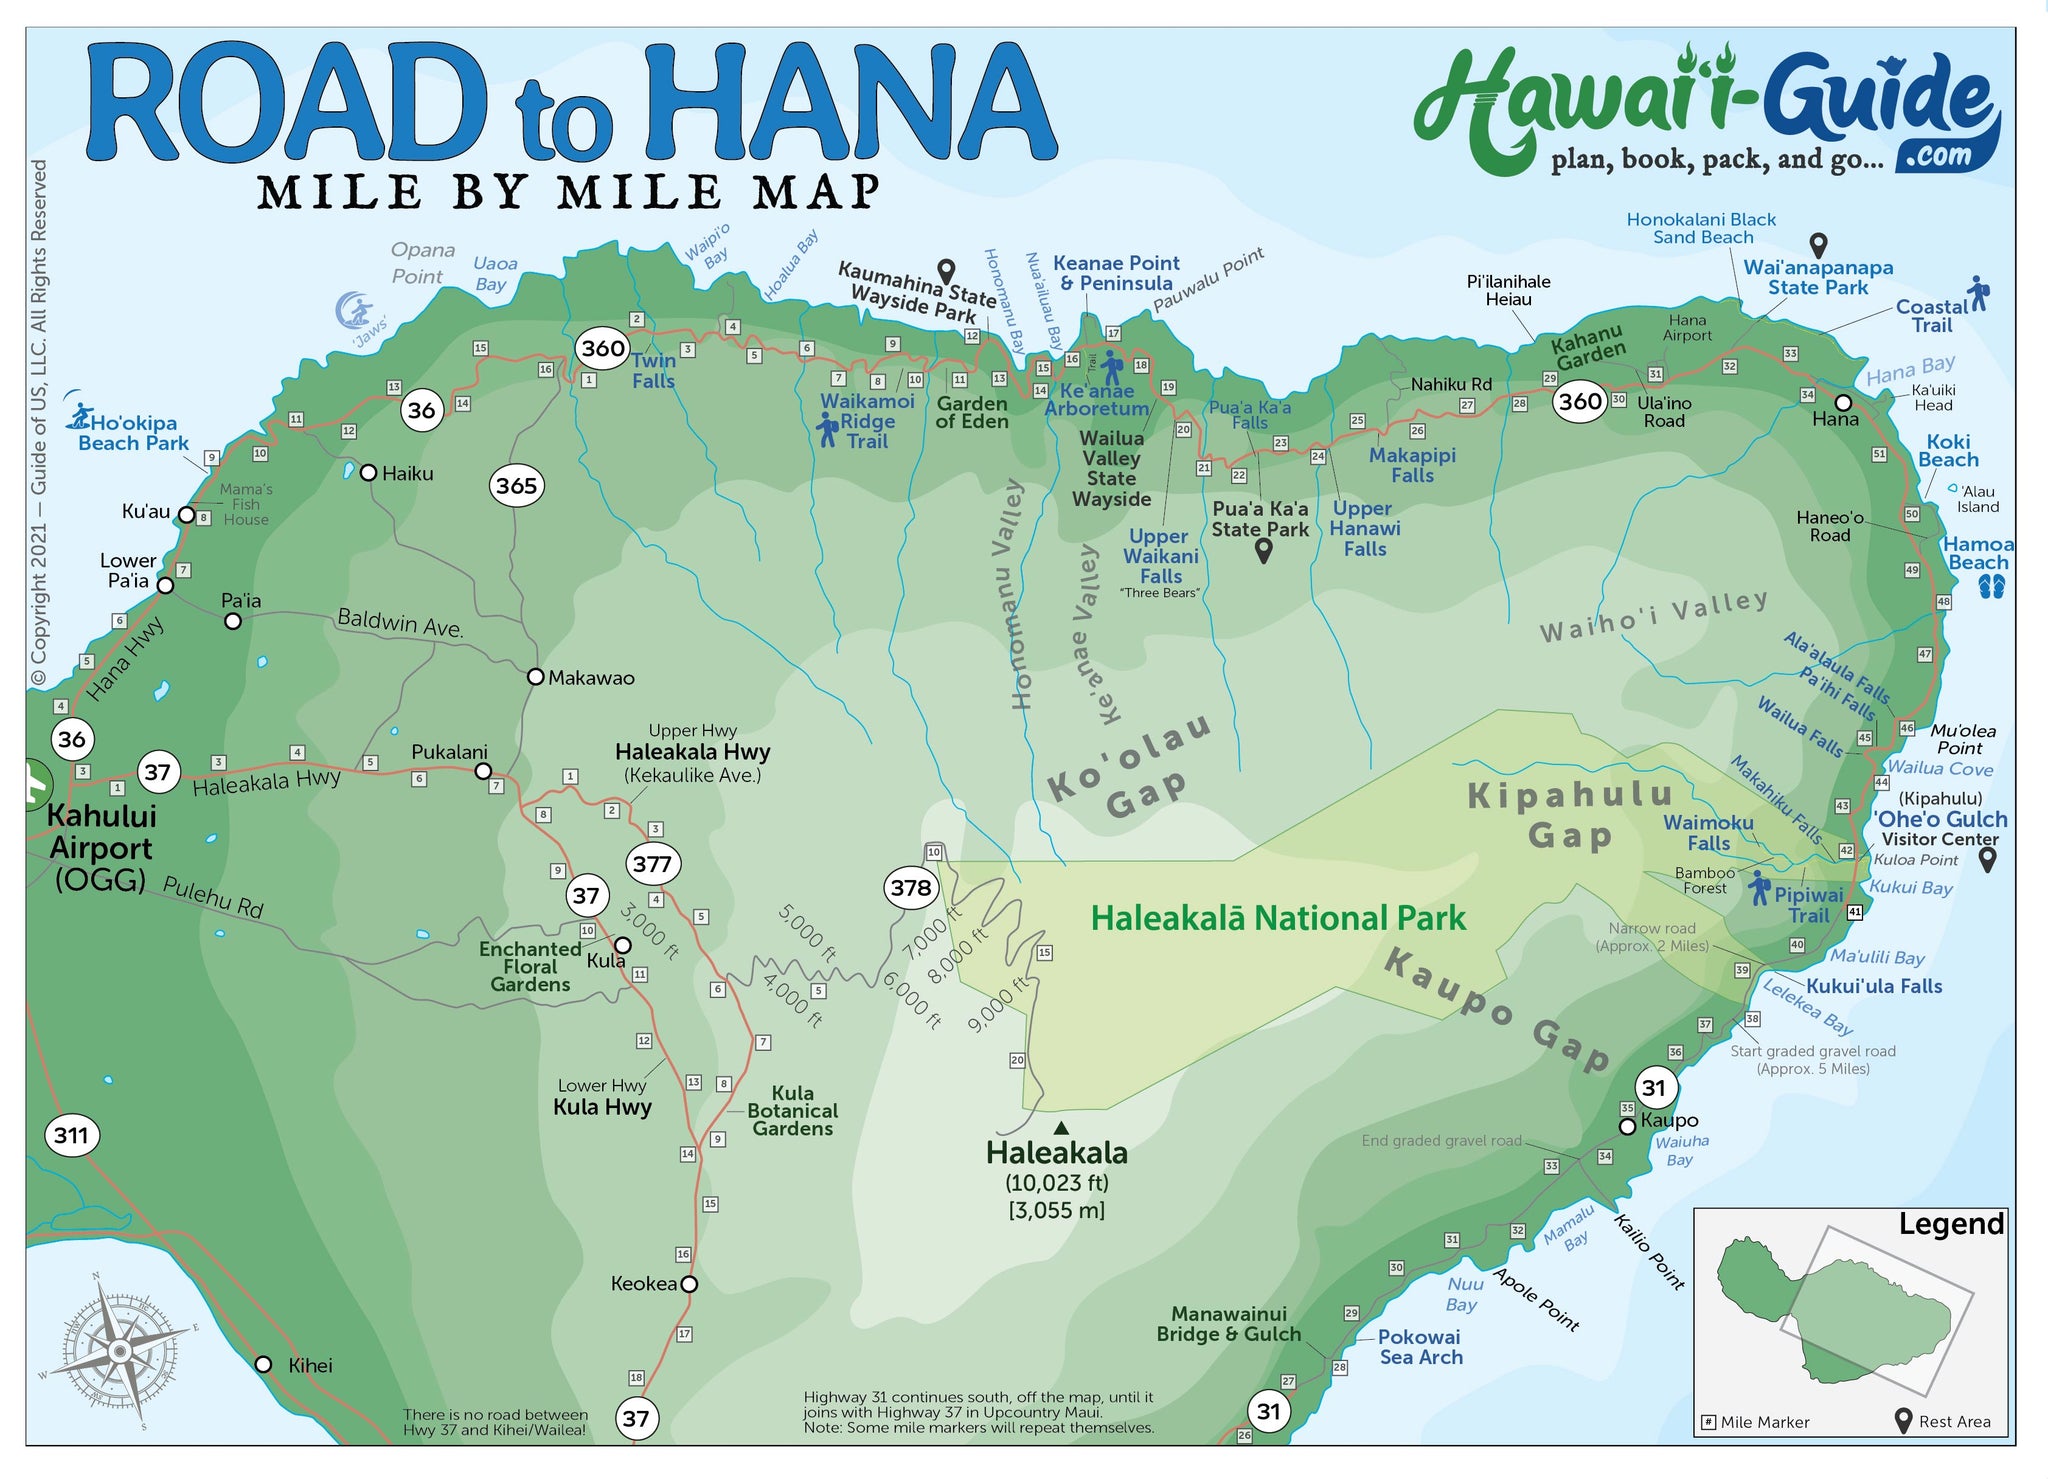 Hawaii Guide Road To Hana Highway Road Map V4 39632a0f Dd59 4e22 901c Bb8893f09588 1024x1024@2x ?v=1672722283